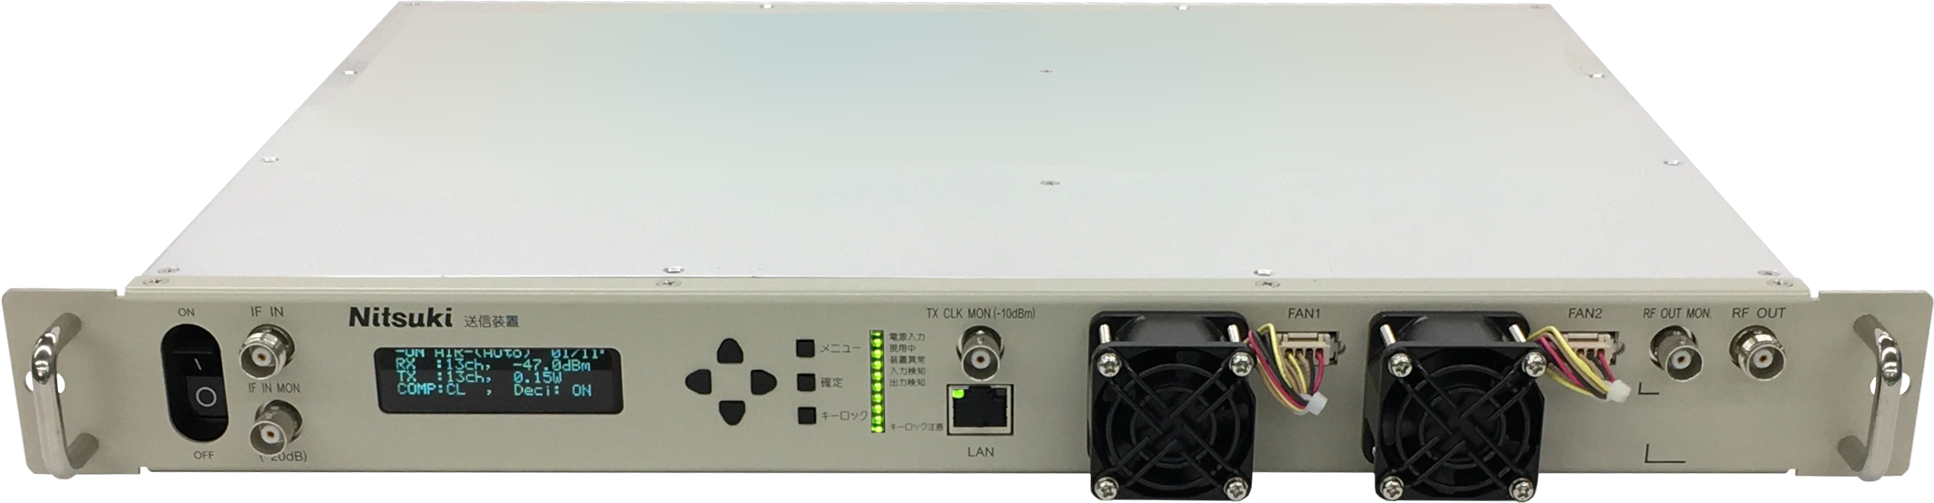 [pic] MODEL 6514 シリーズ: 地上デジタル放送 送信装置(LookDownShot)